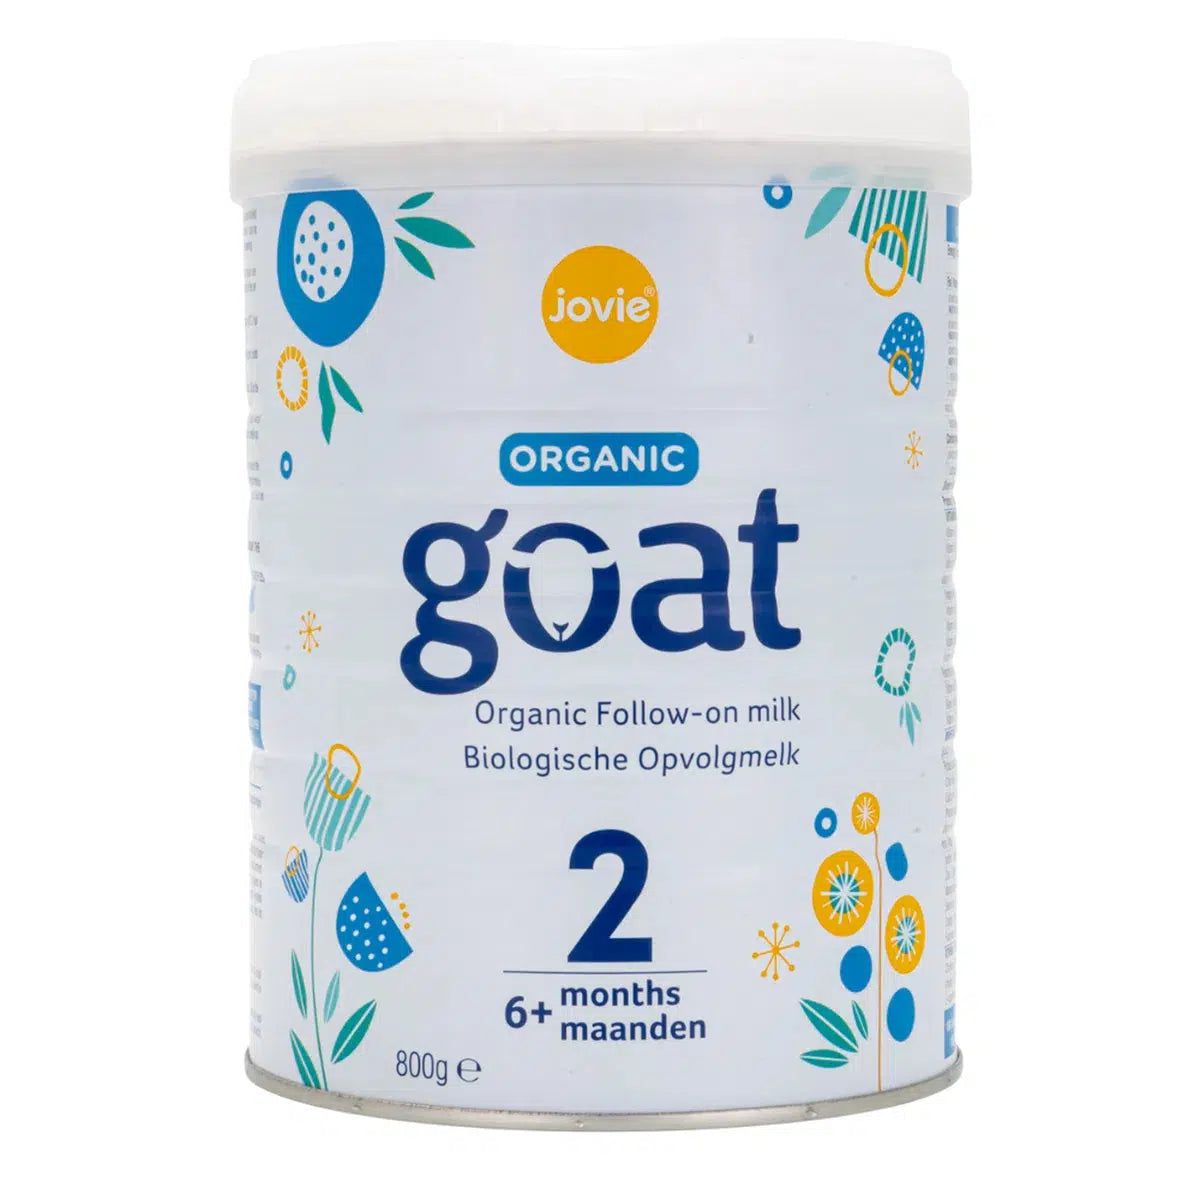 Jovie Stage 2 Organic Goat Milk Formula (800g) - 24 Cans